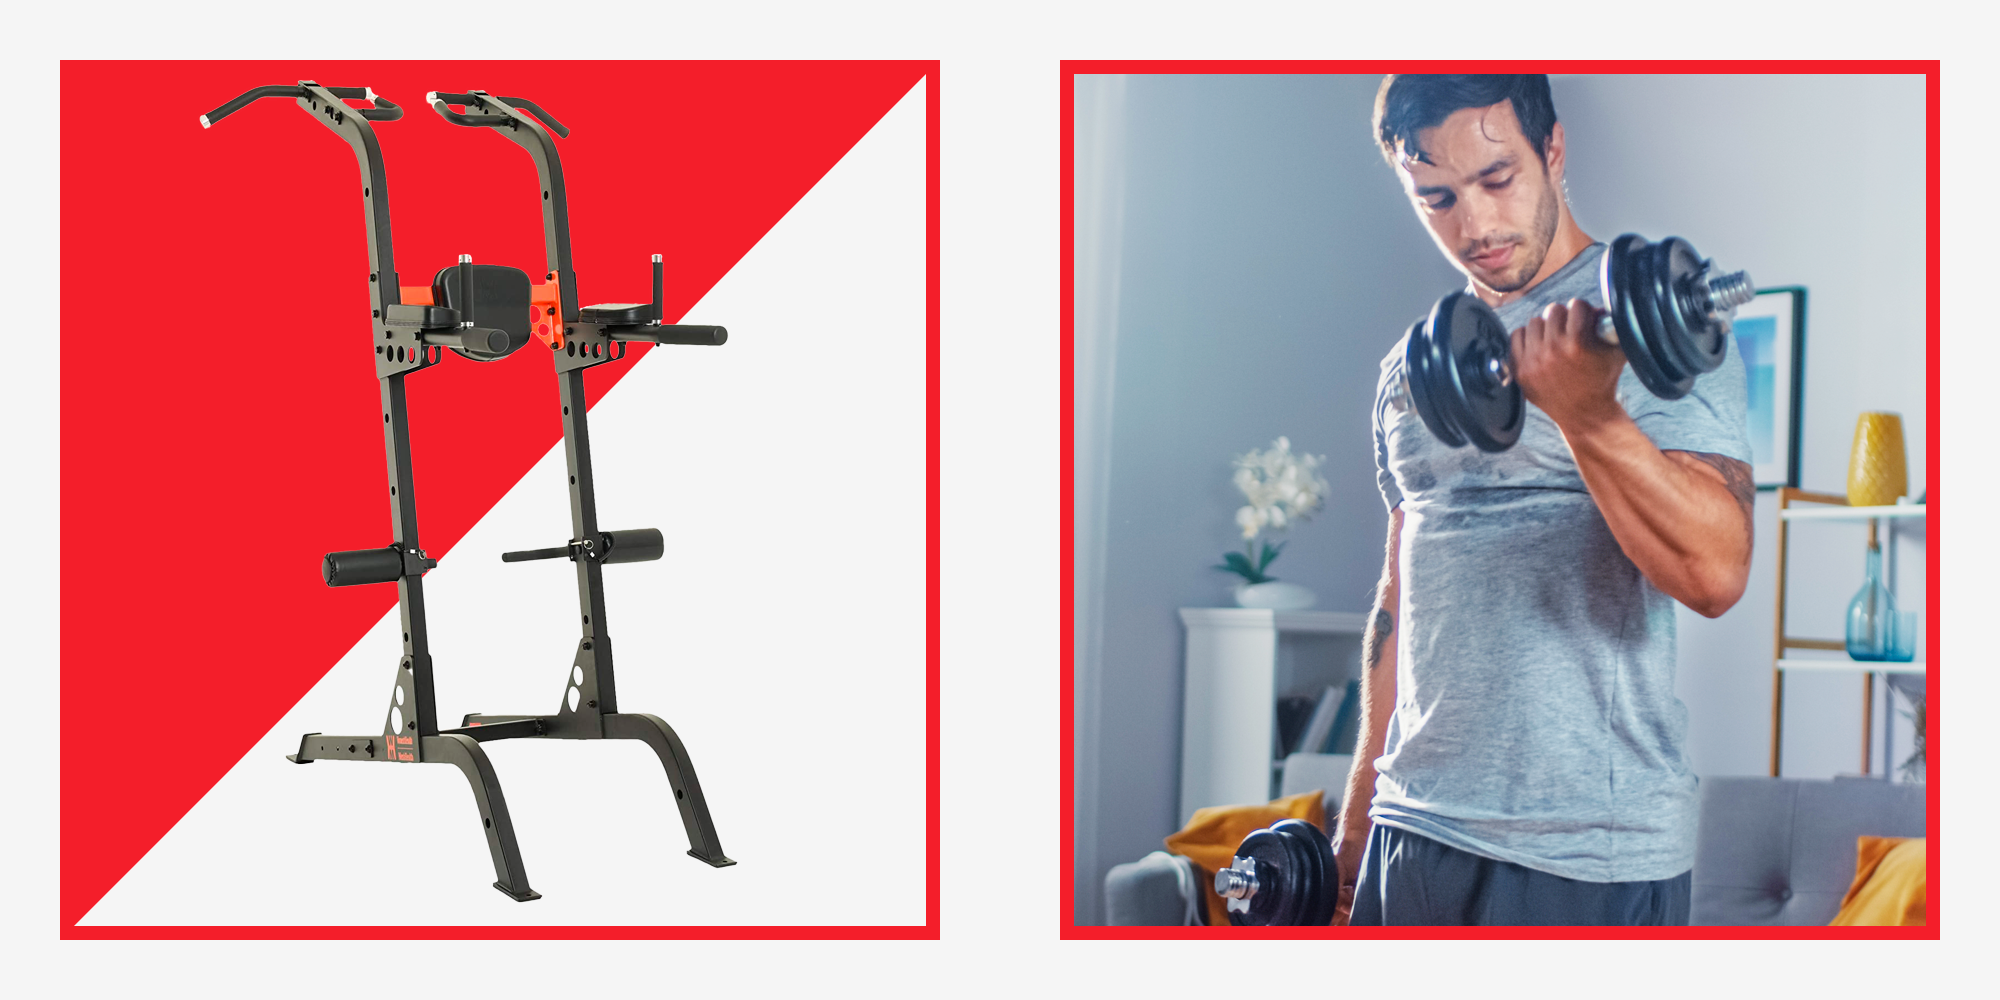 Indoor Sport Home Gym Equipment Workout Fitness Exercisw Accessories QK 